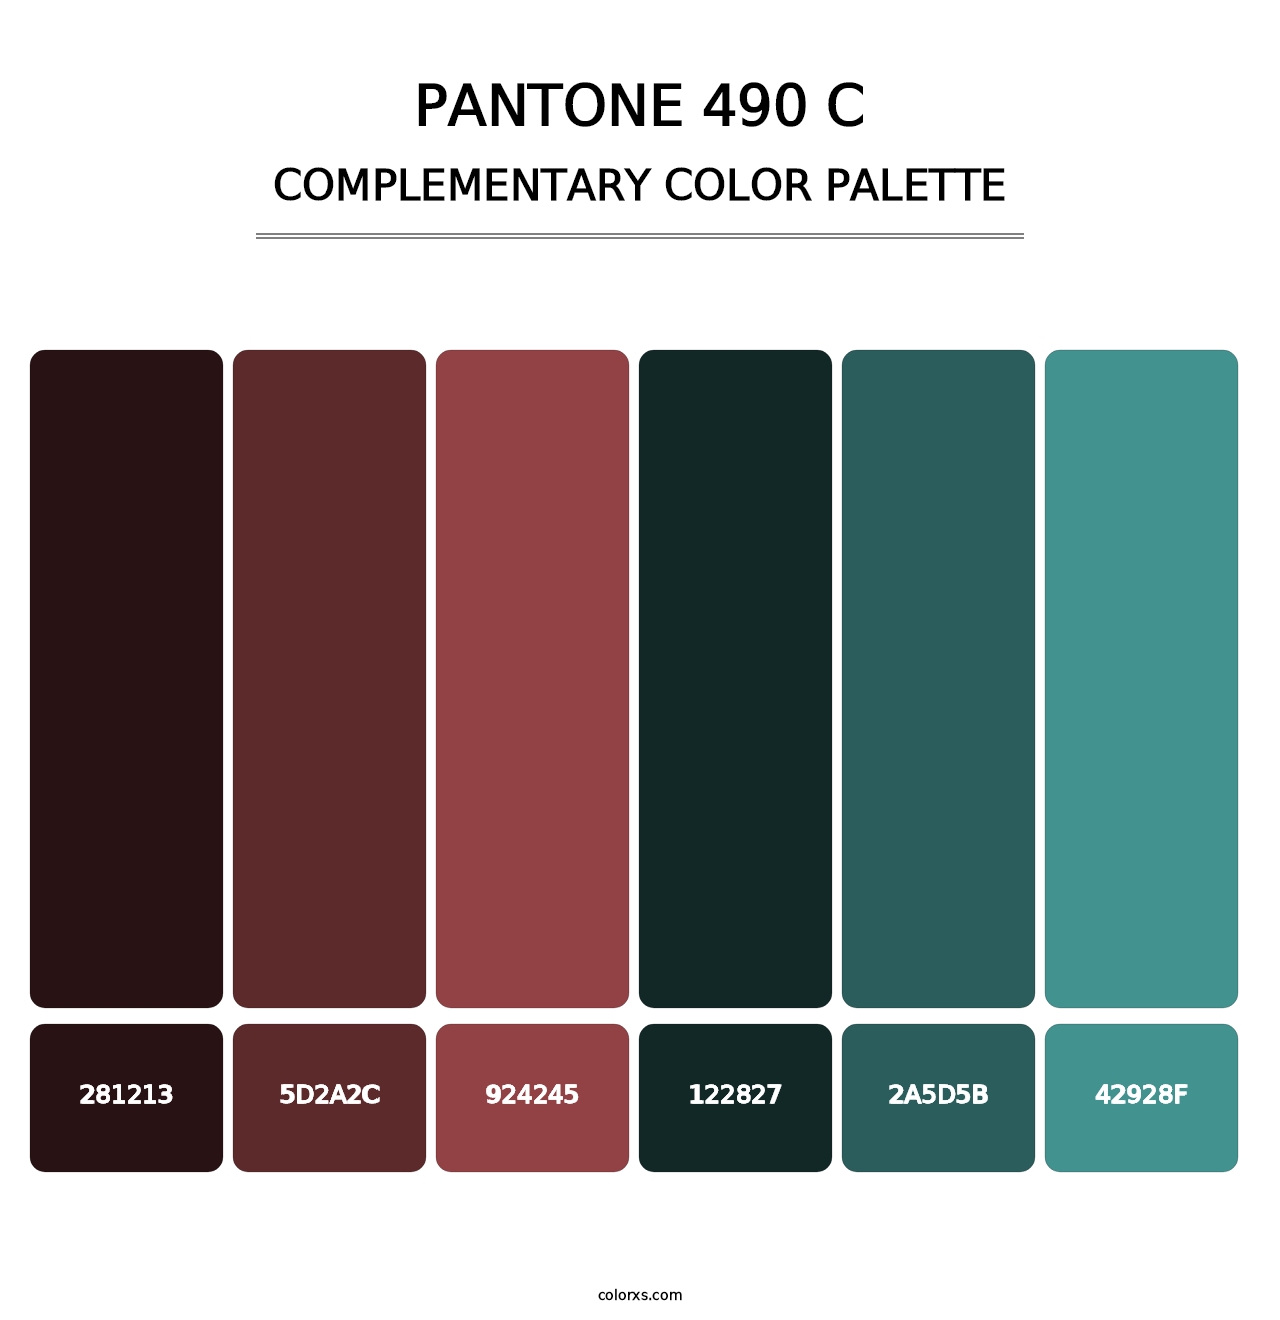 PANTONE 490 C - Complementary Color Palette